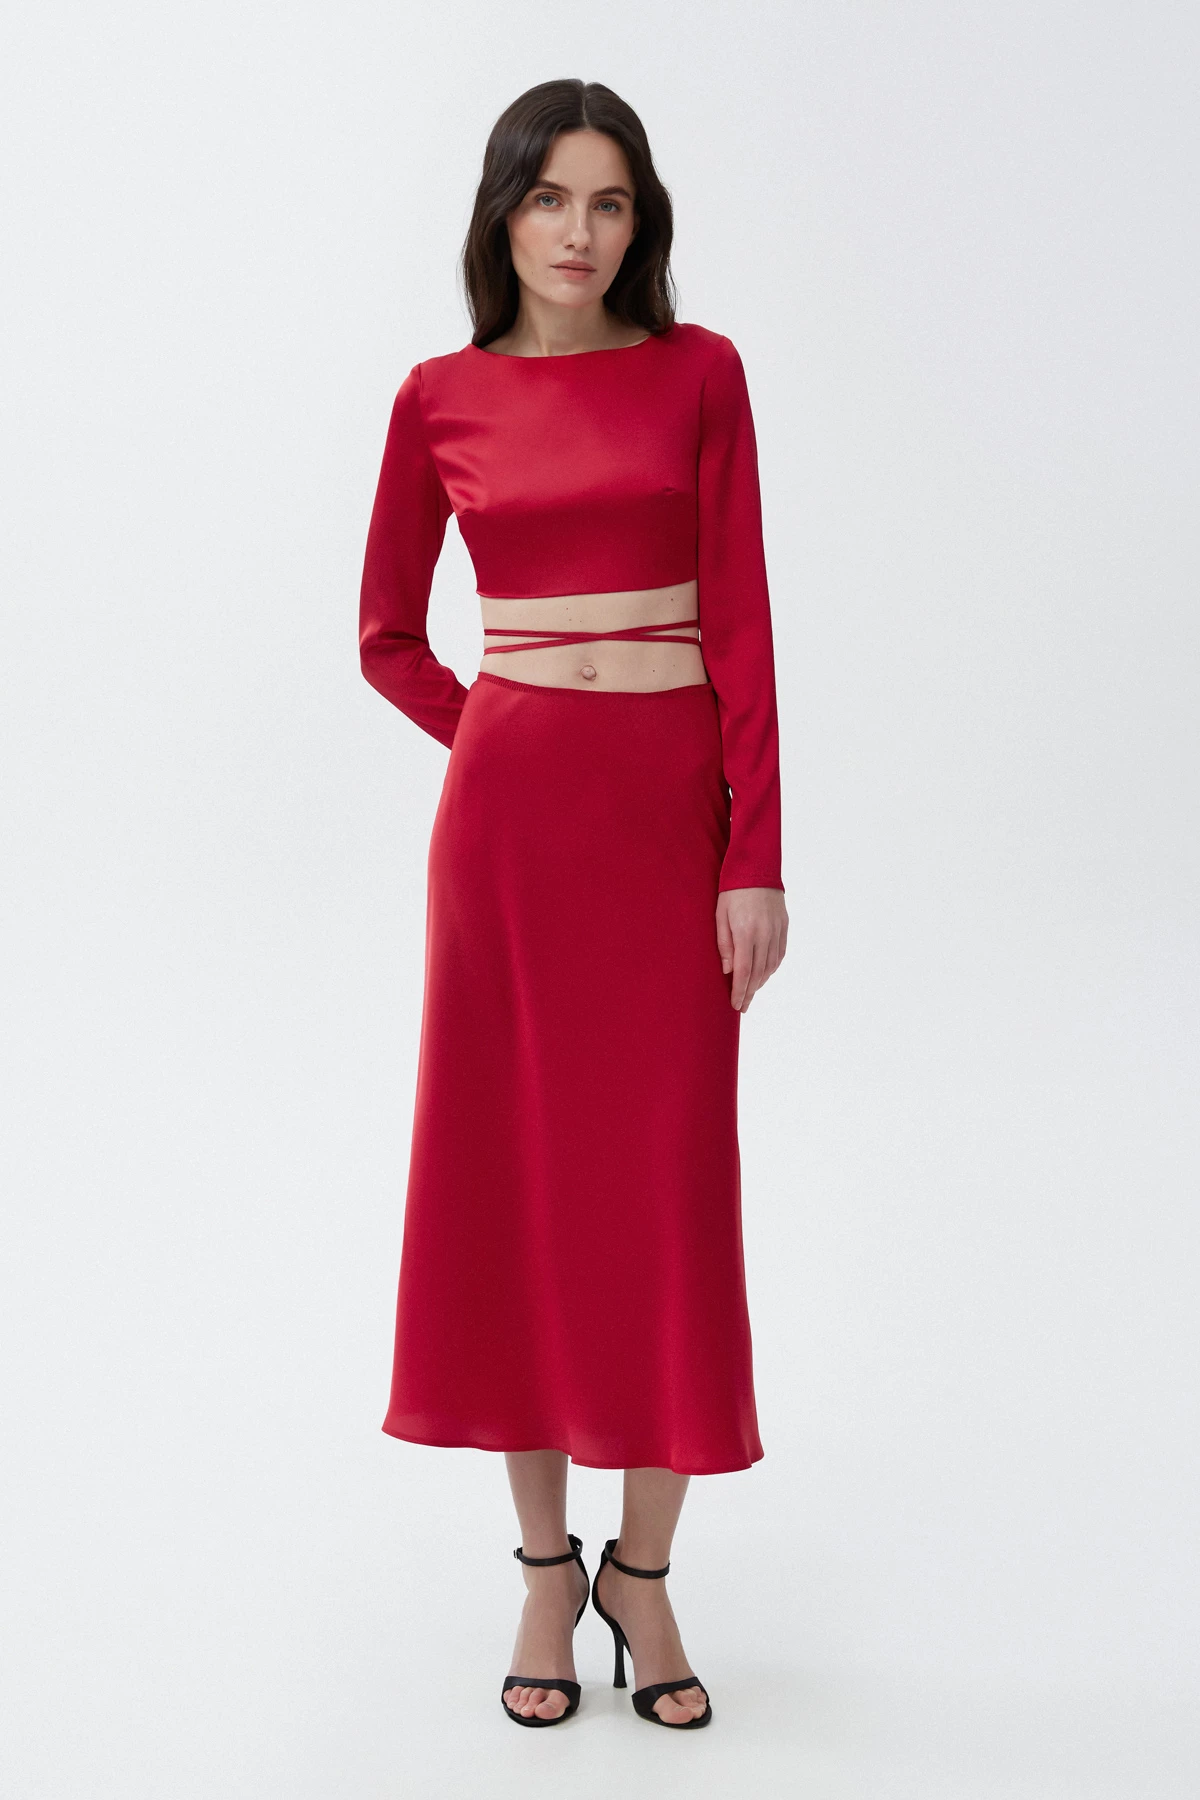 Red satin midi skirt, photo 2